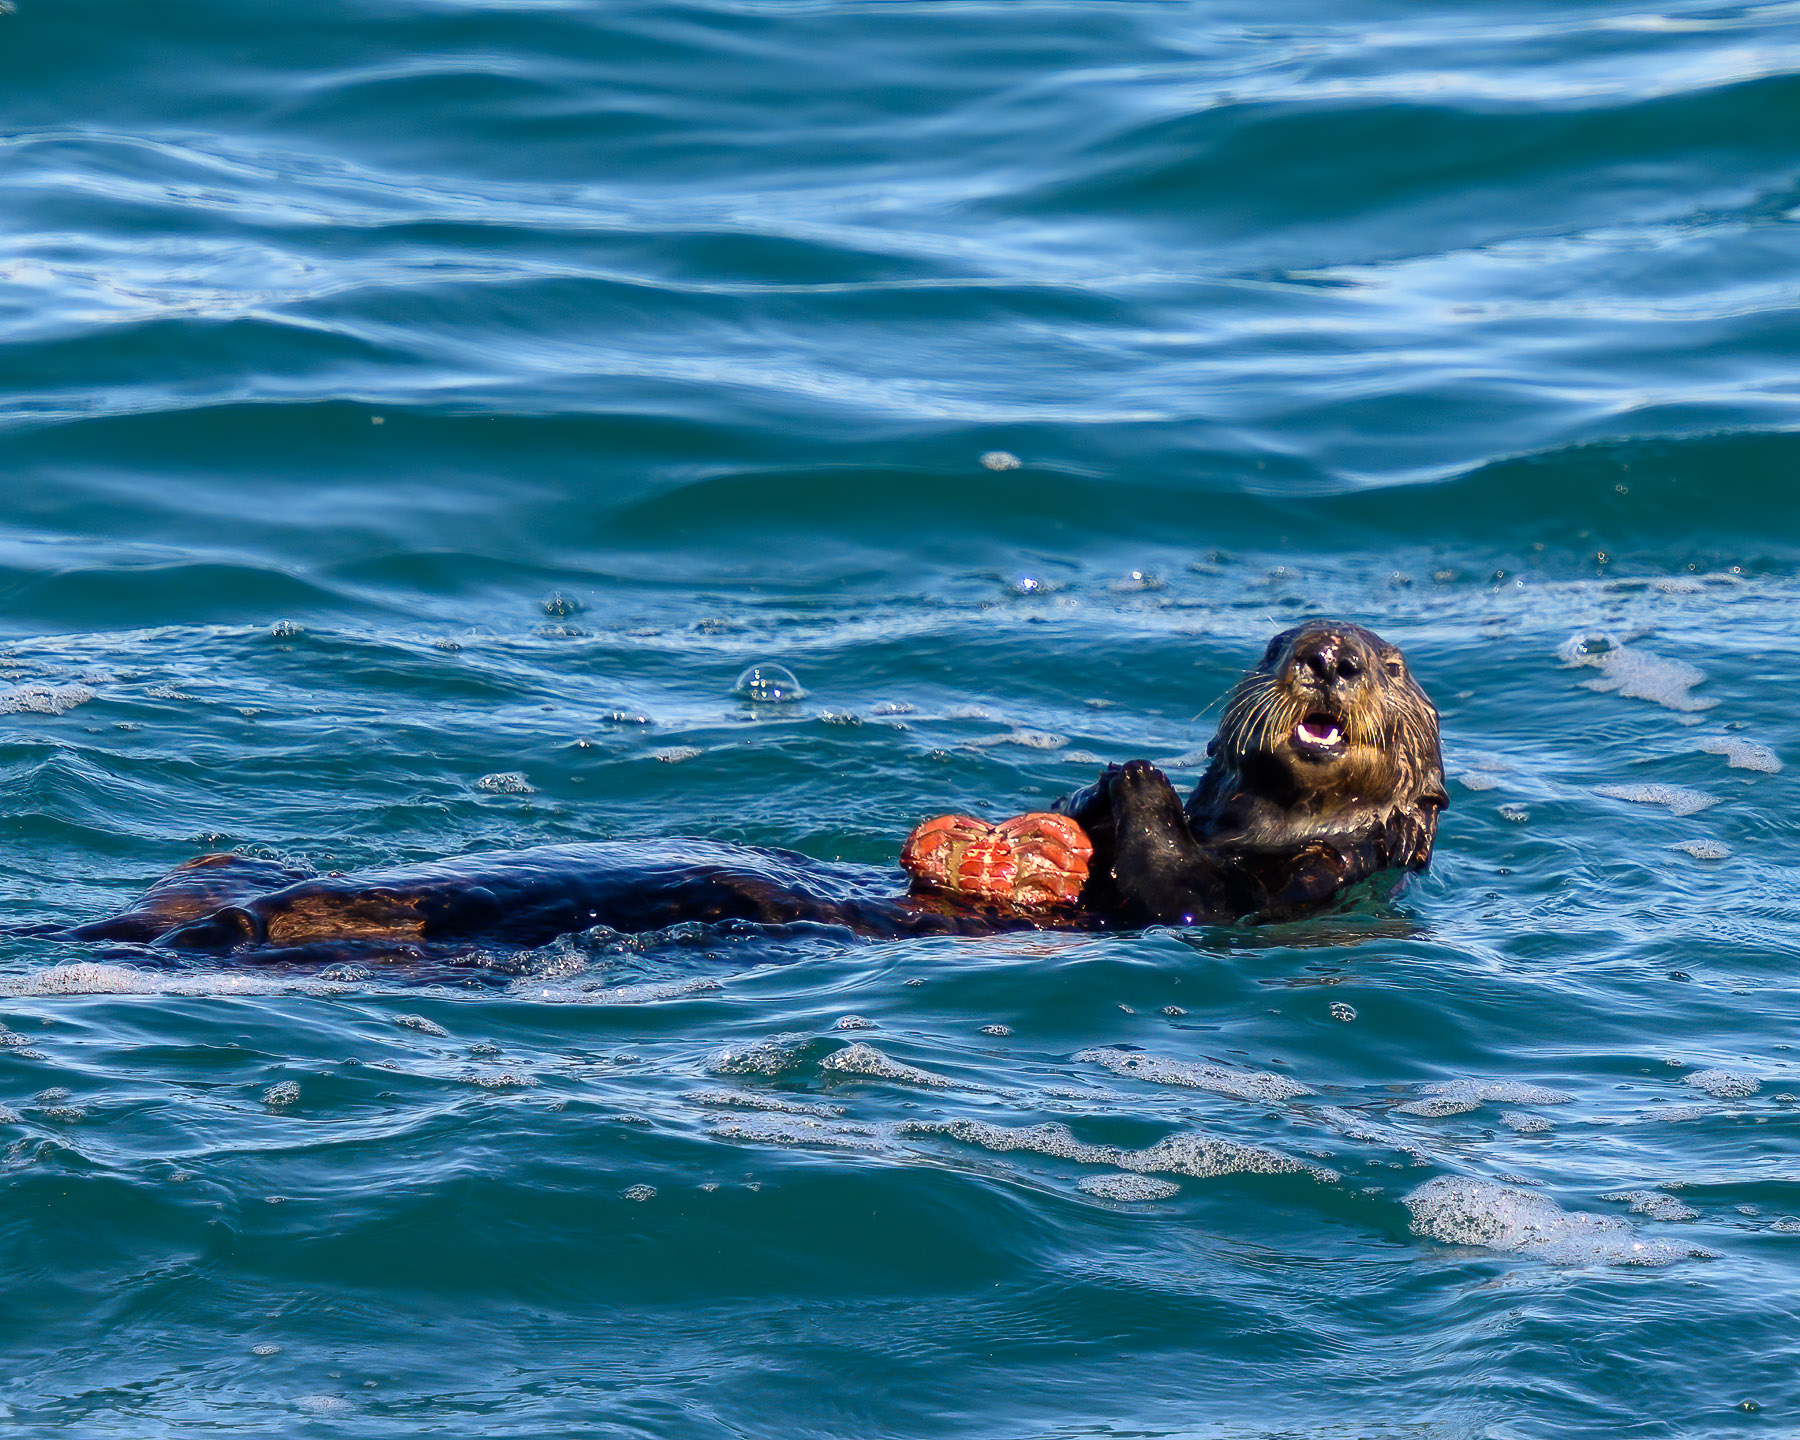 Sea Otter by Bud Ralston